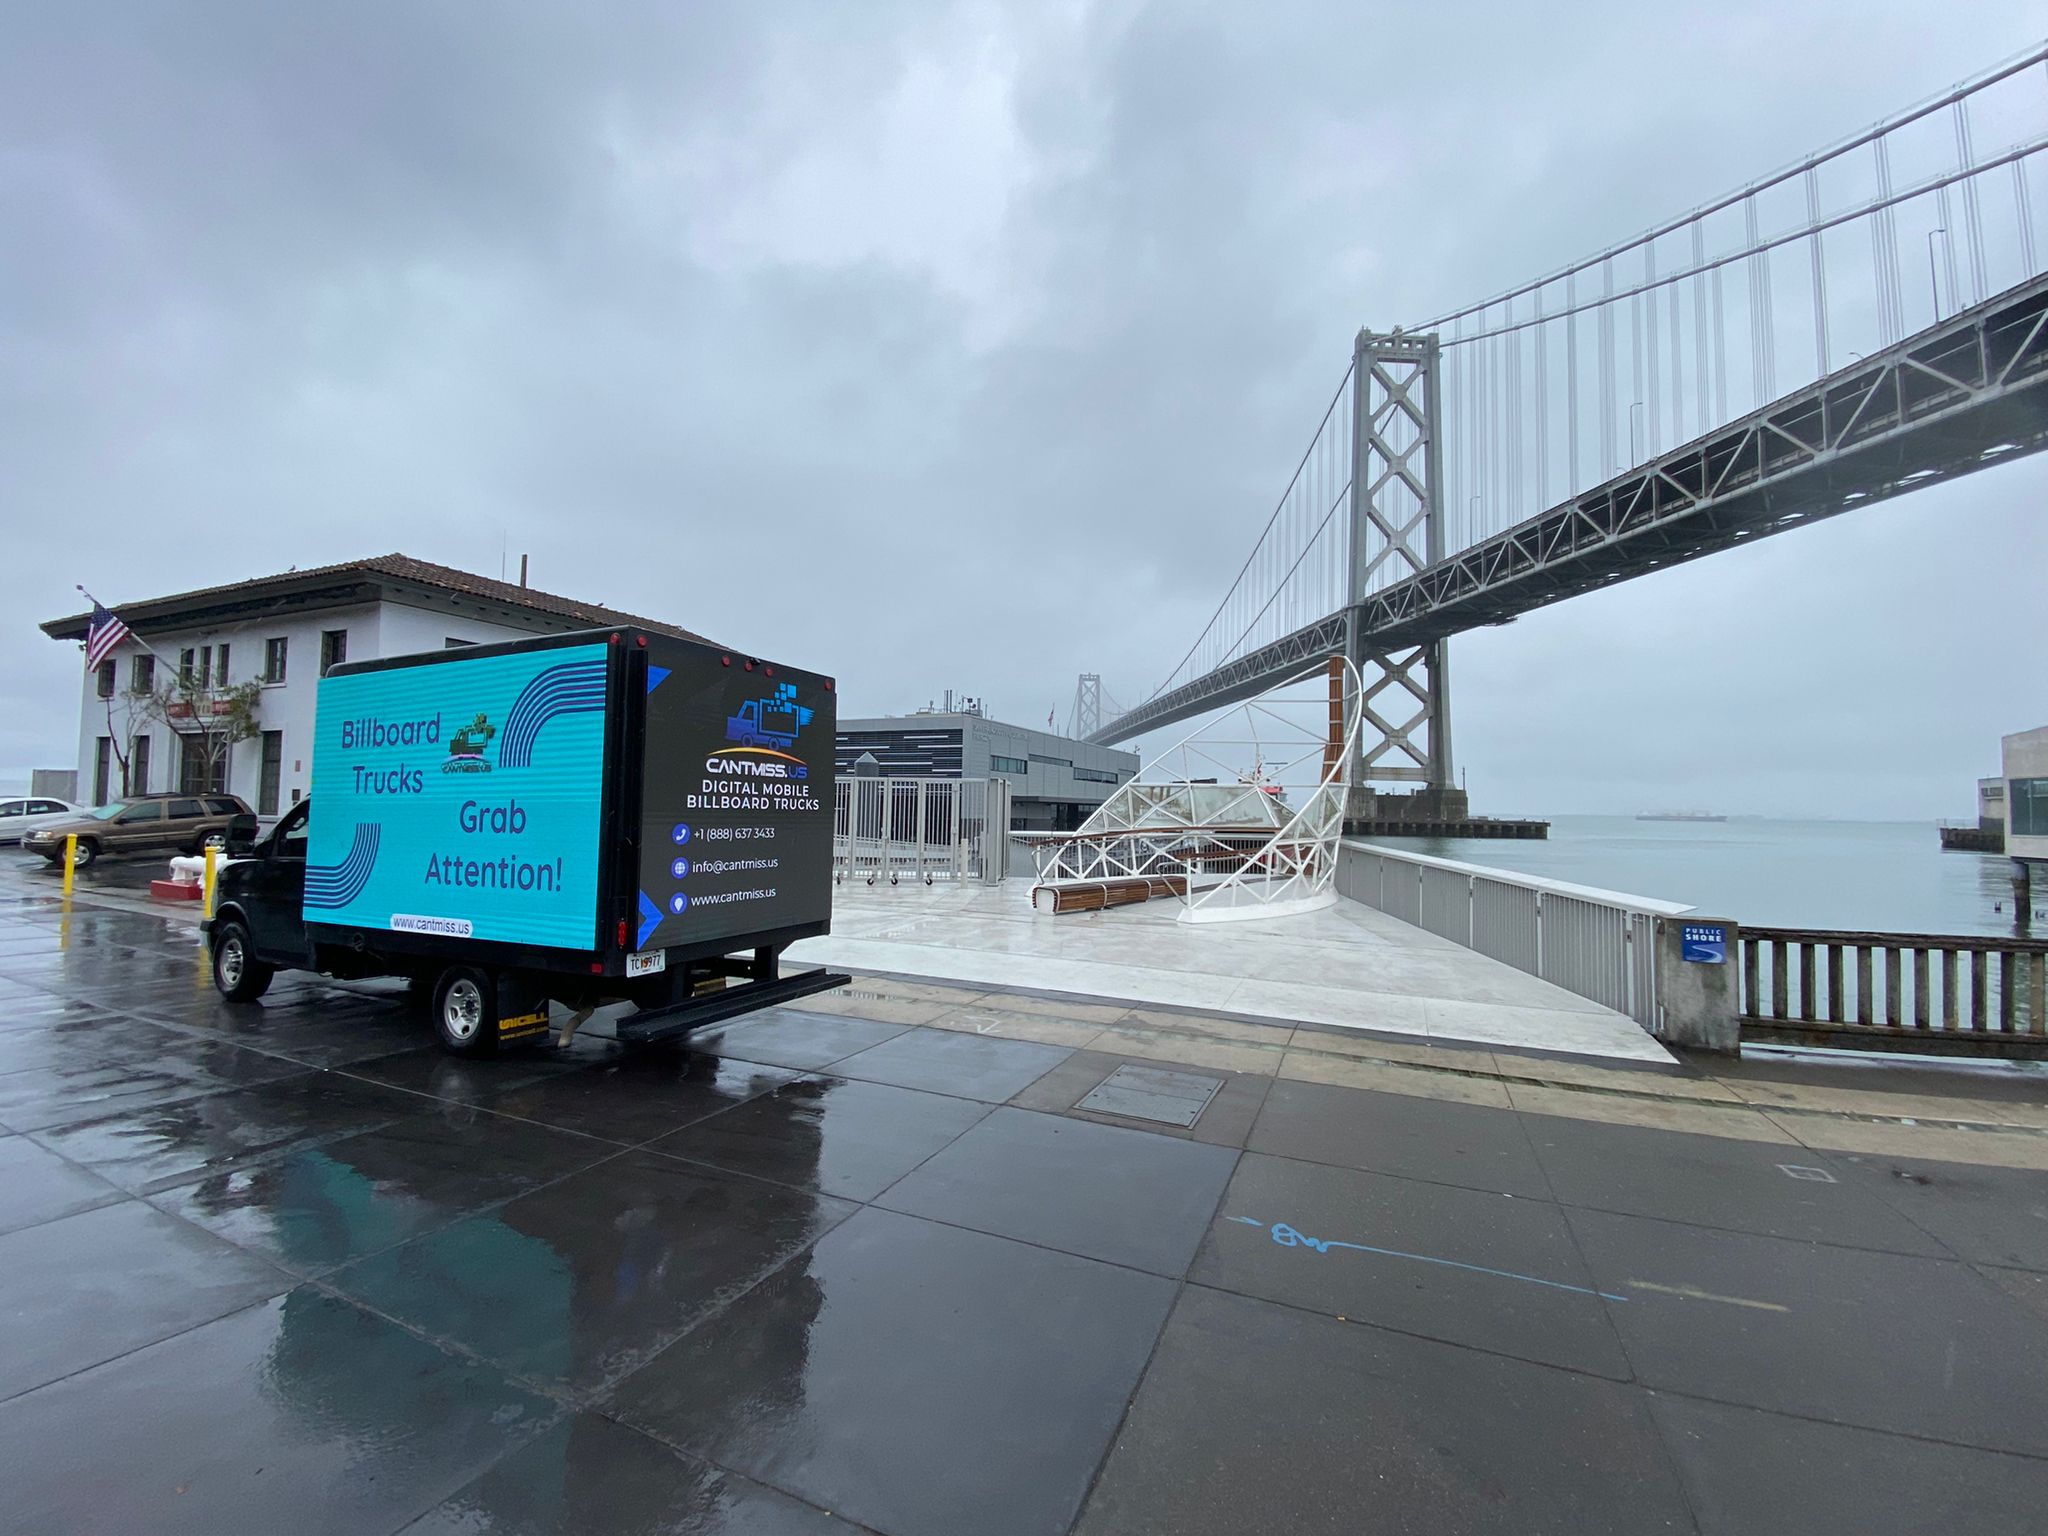 San Fransico Digital Mobile billboard Trucks (5)